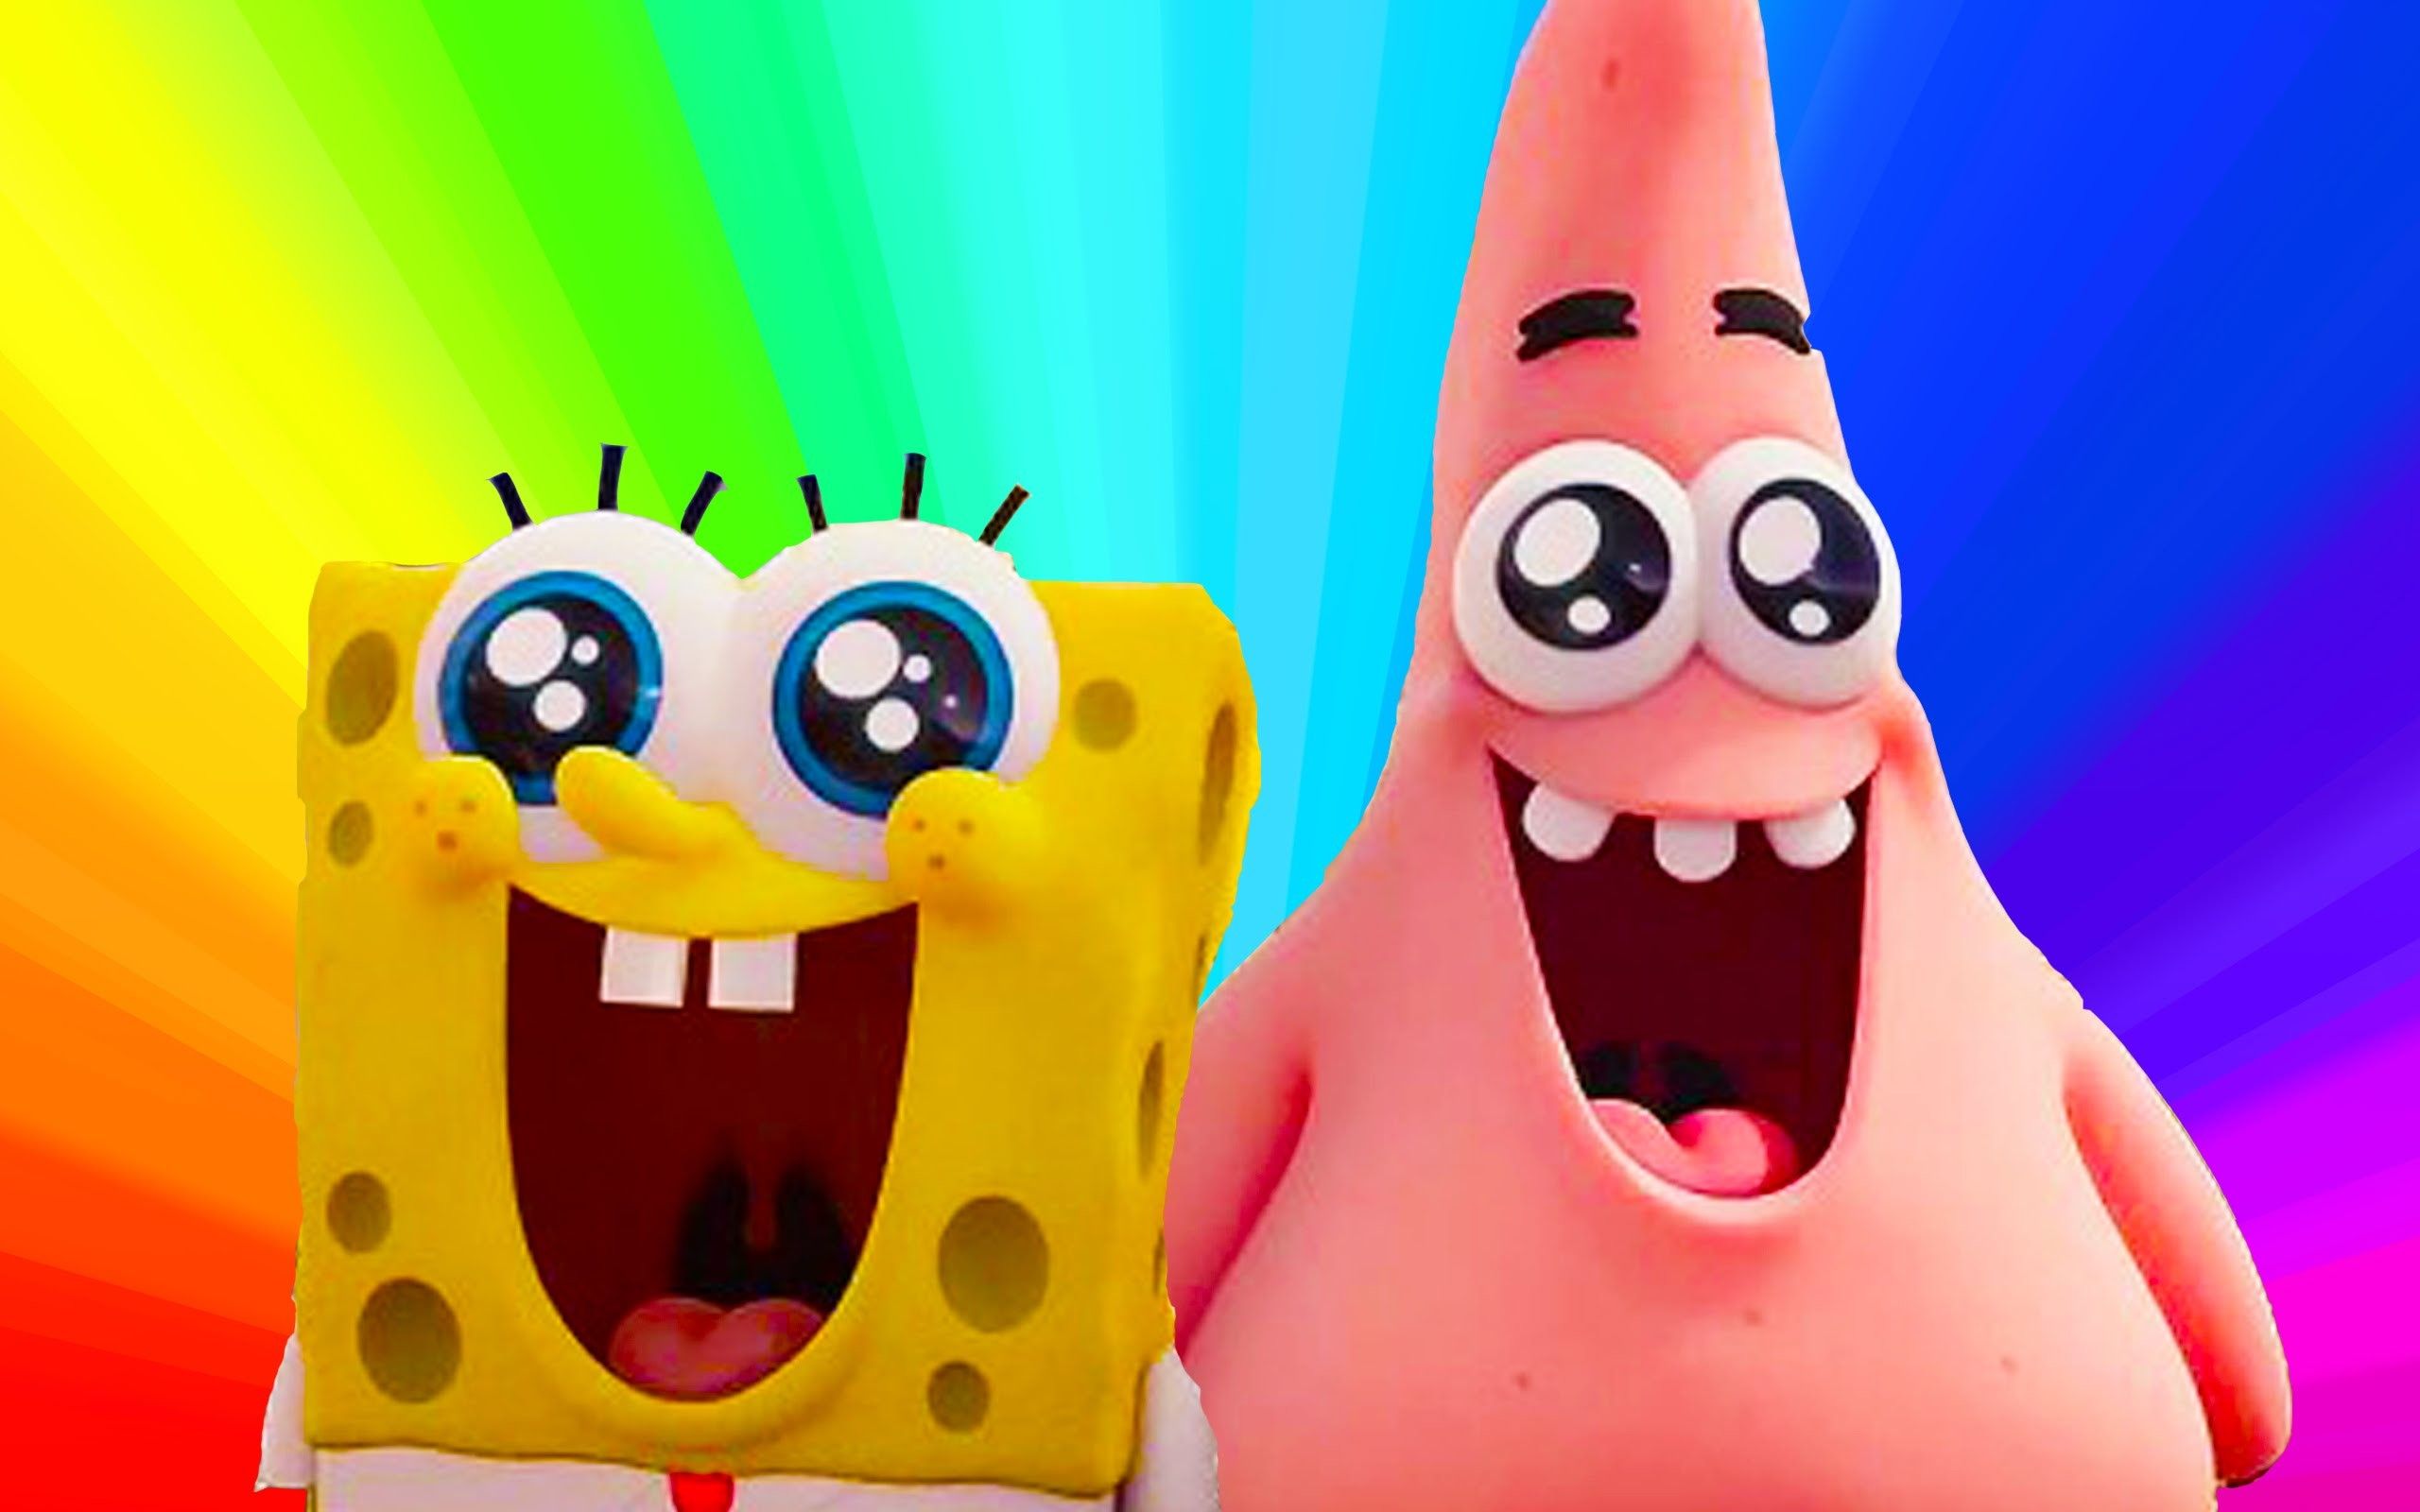 Download Gambar Spongebob Lucu. Spongebob and patrick wallpaper, Patrick star wallpaper, Patrick wallpaper